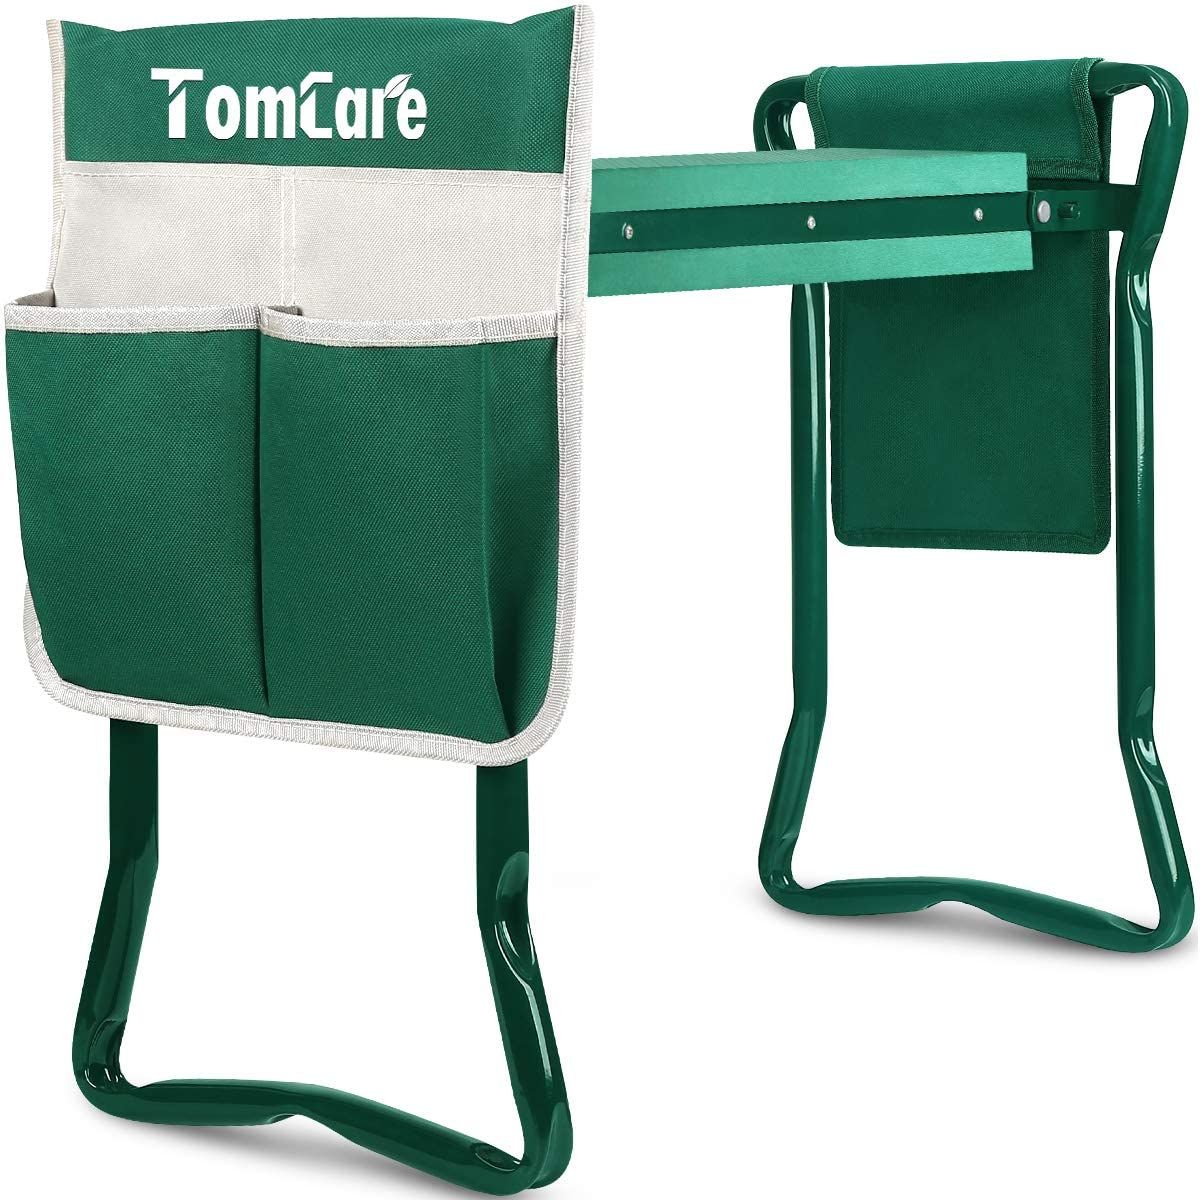 Tomcare Garden Kneeler Bench - $$title$$